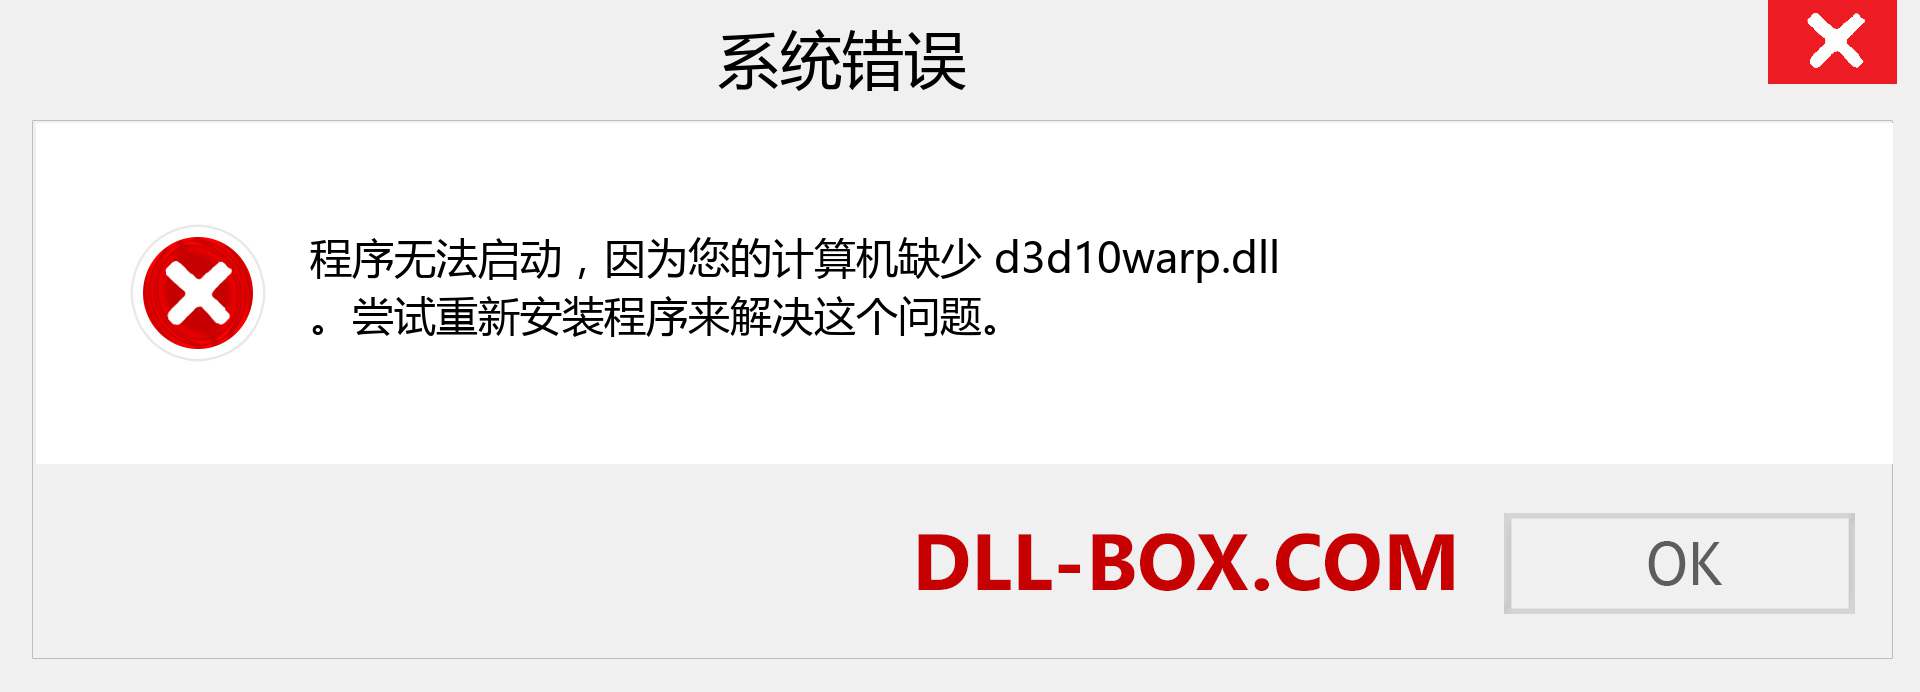 d3d10warp.dll 文件丢失？。 适用于 Windows 7、8、10 的下载 - 修复 Windows、照片、图像上的 d3d10warp dll 丢失错误